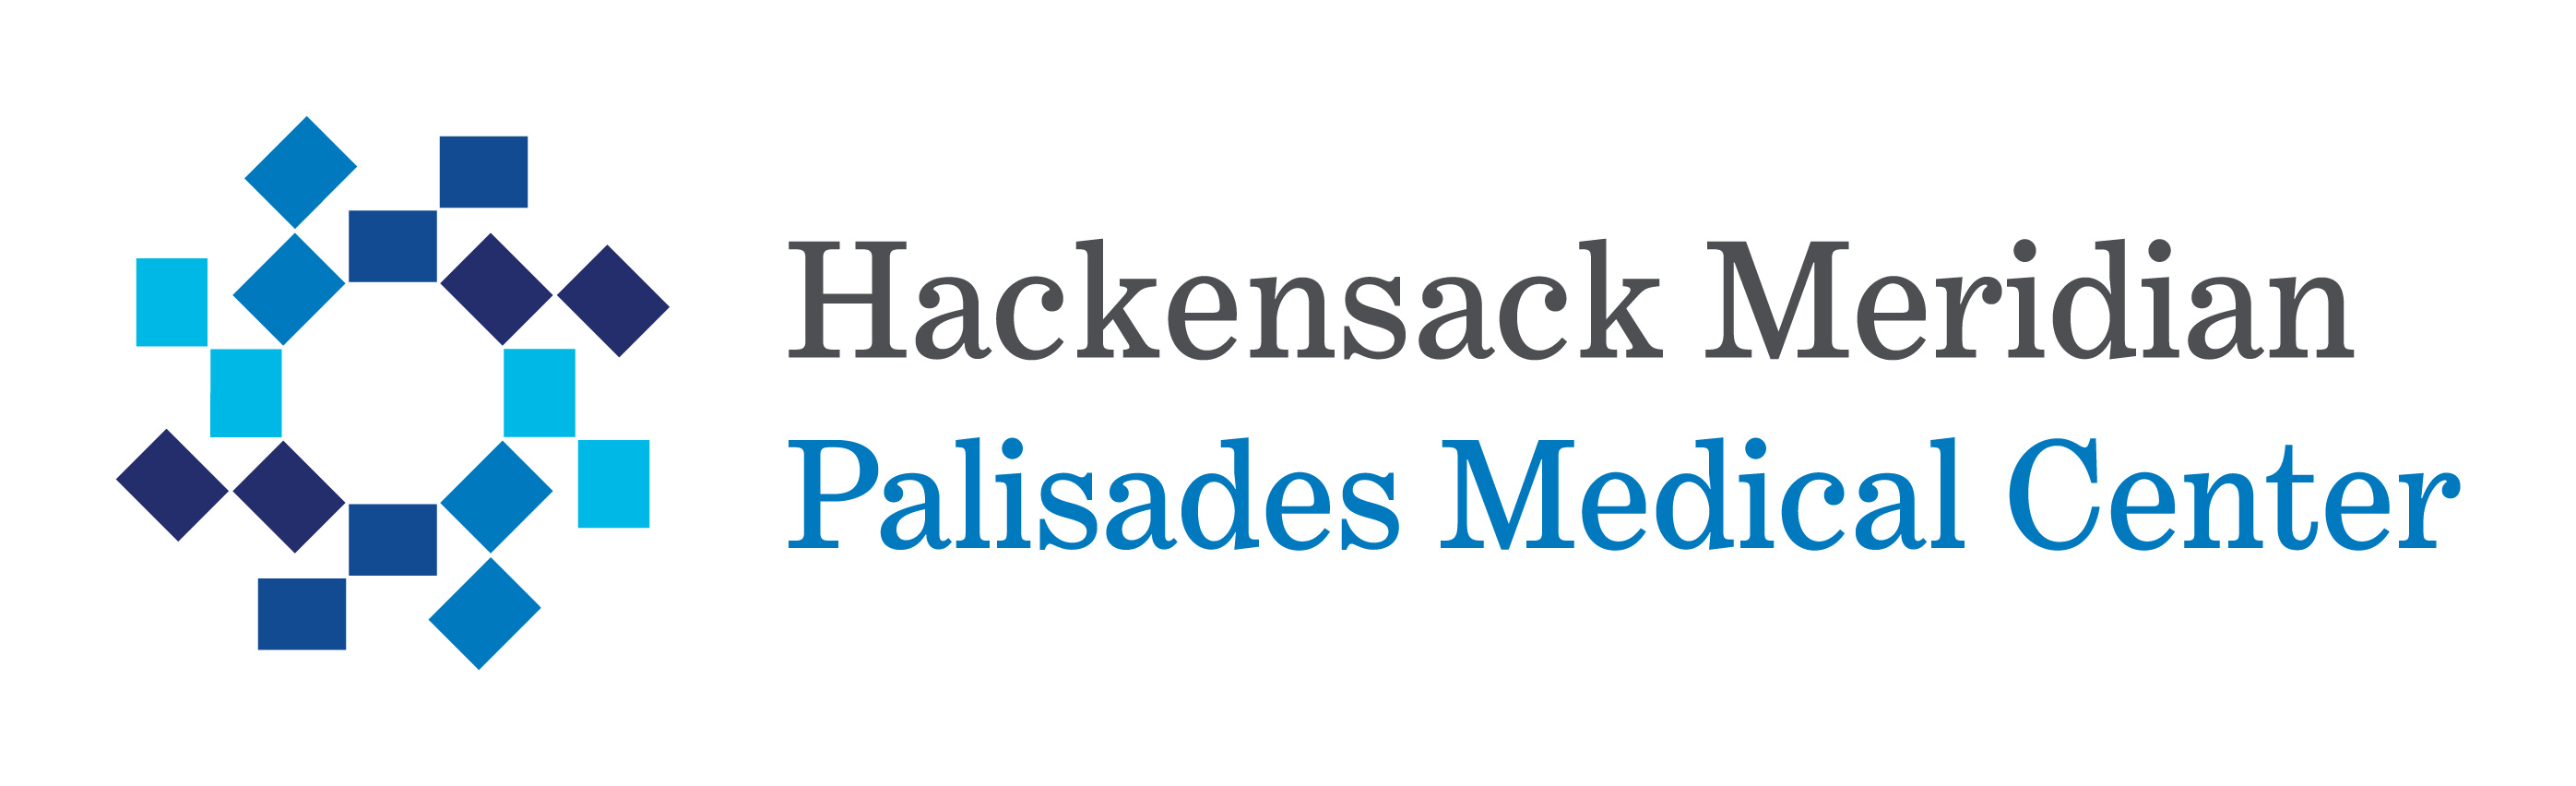 Hackensack Meridian Children's Health logo